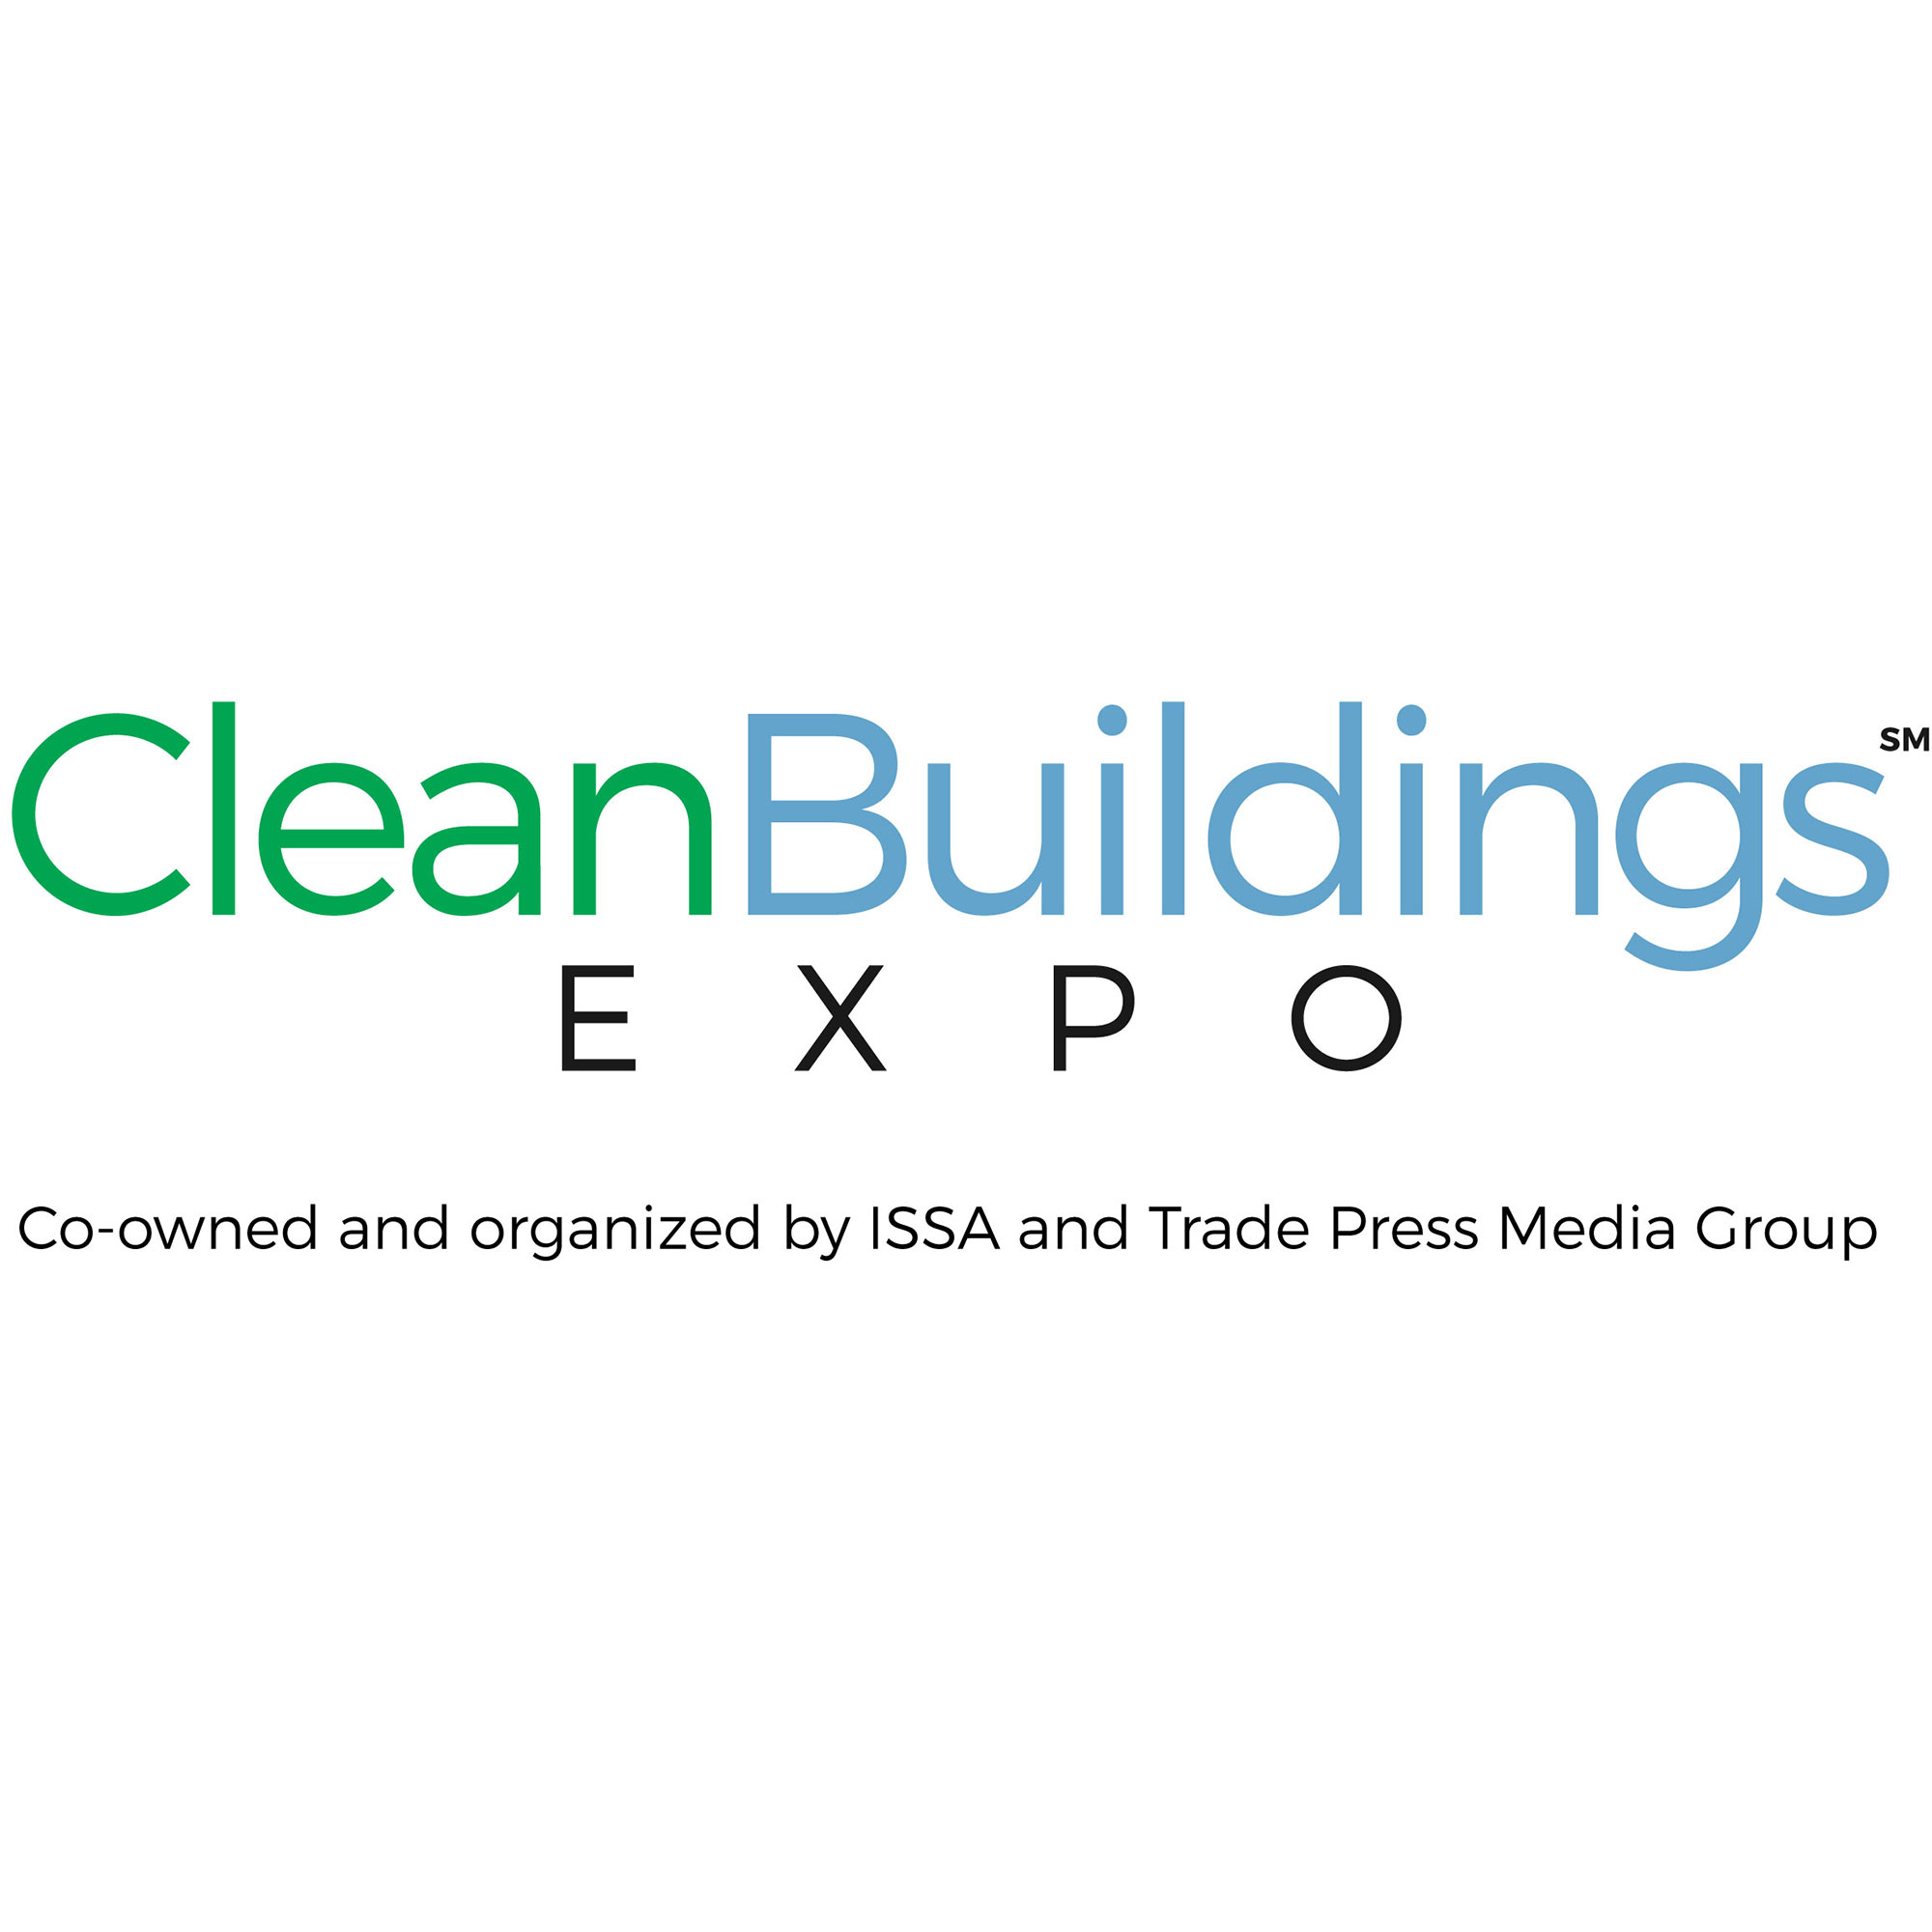 Clean Buildings Expo 2019